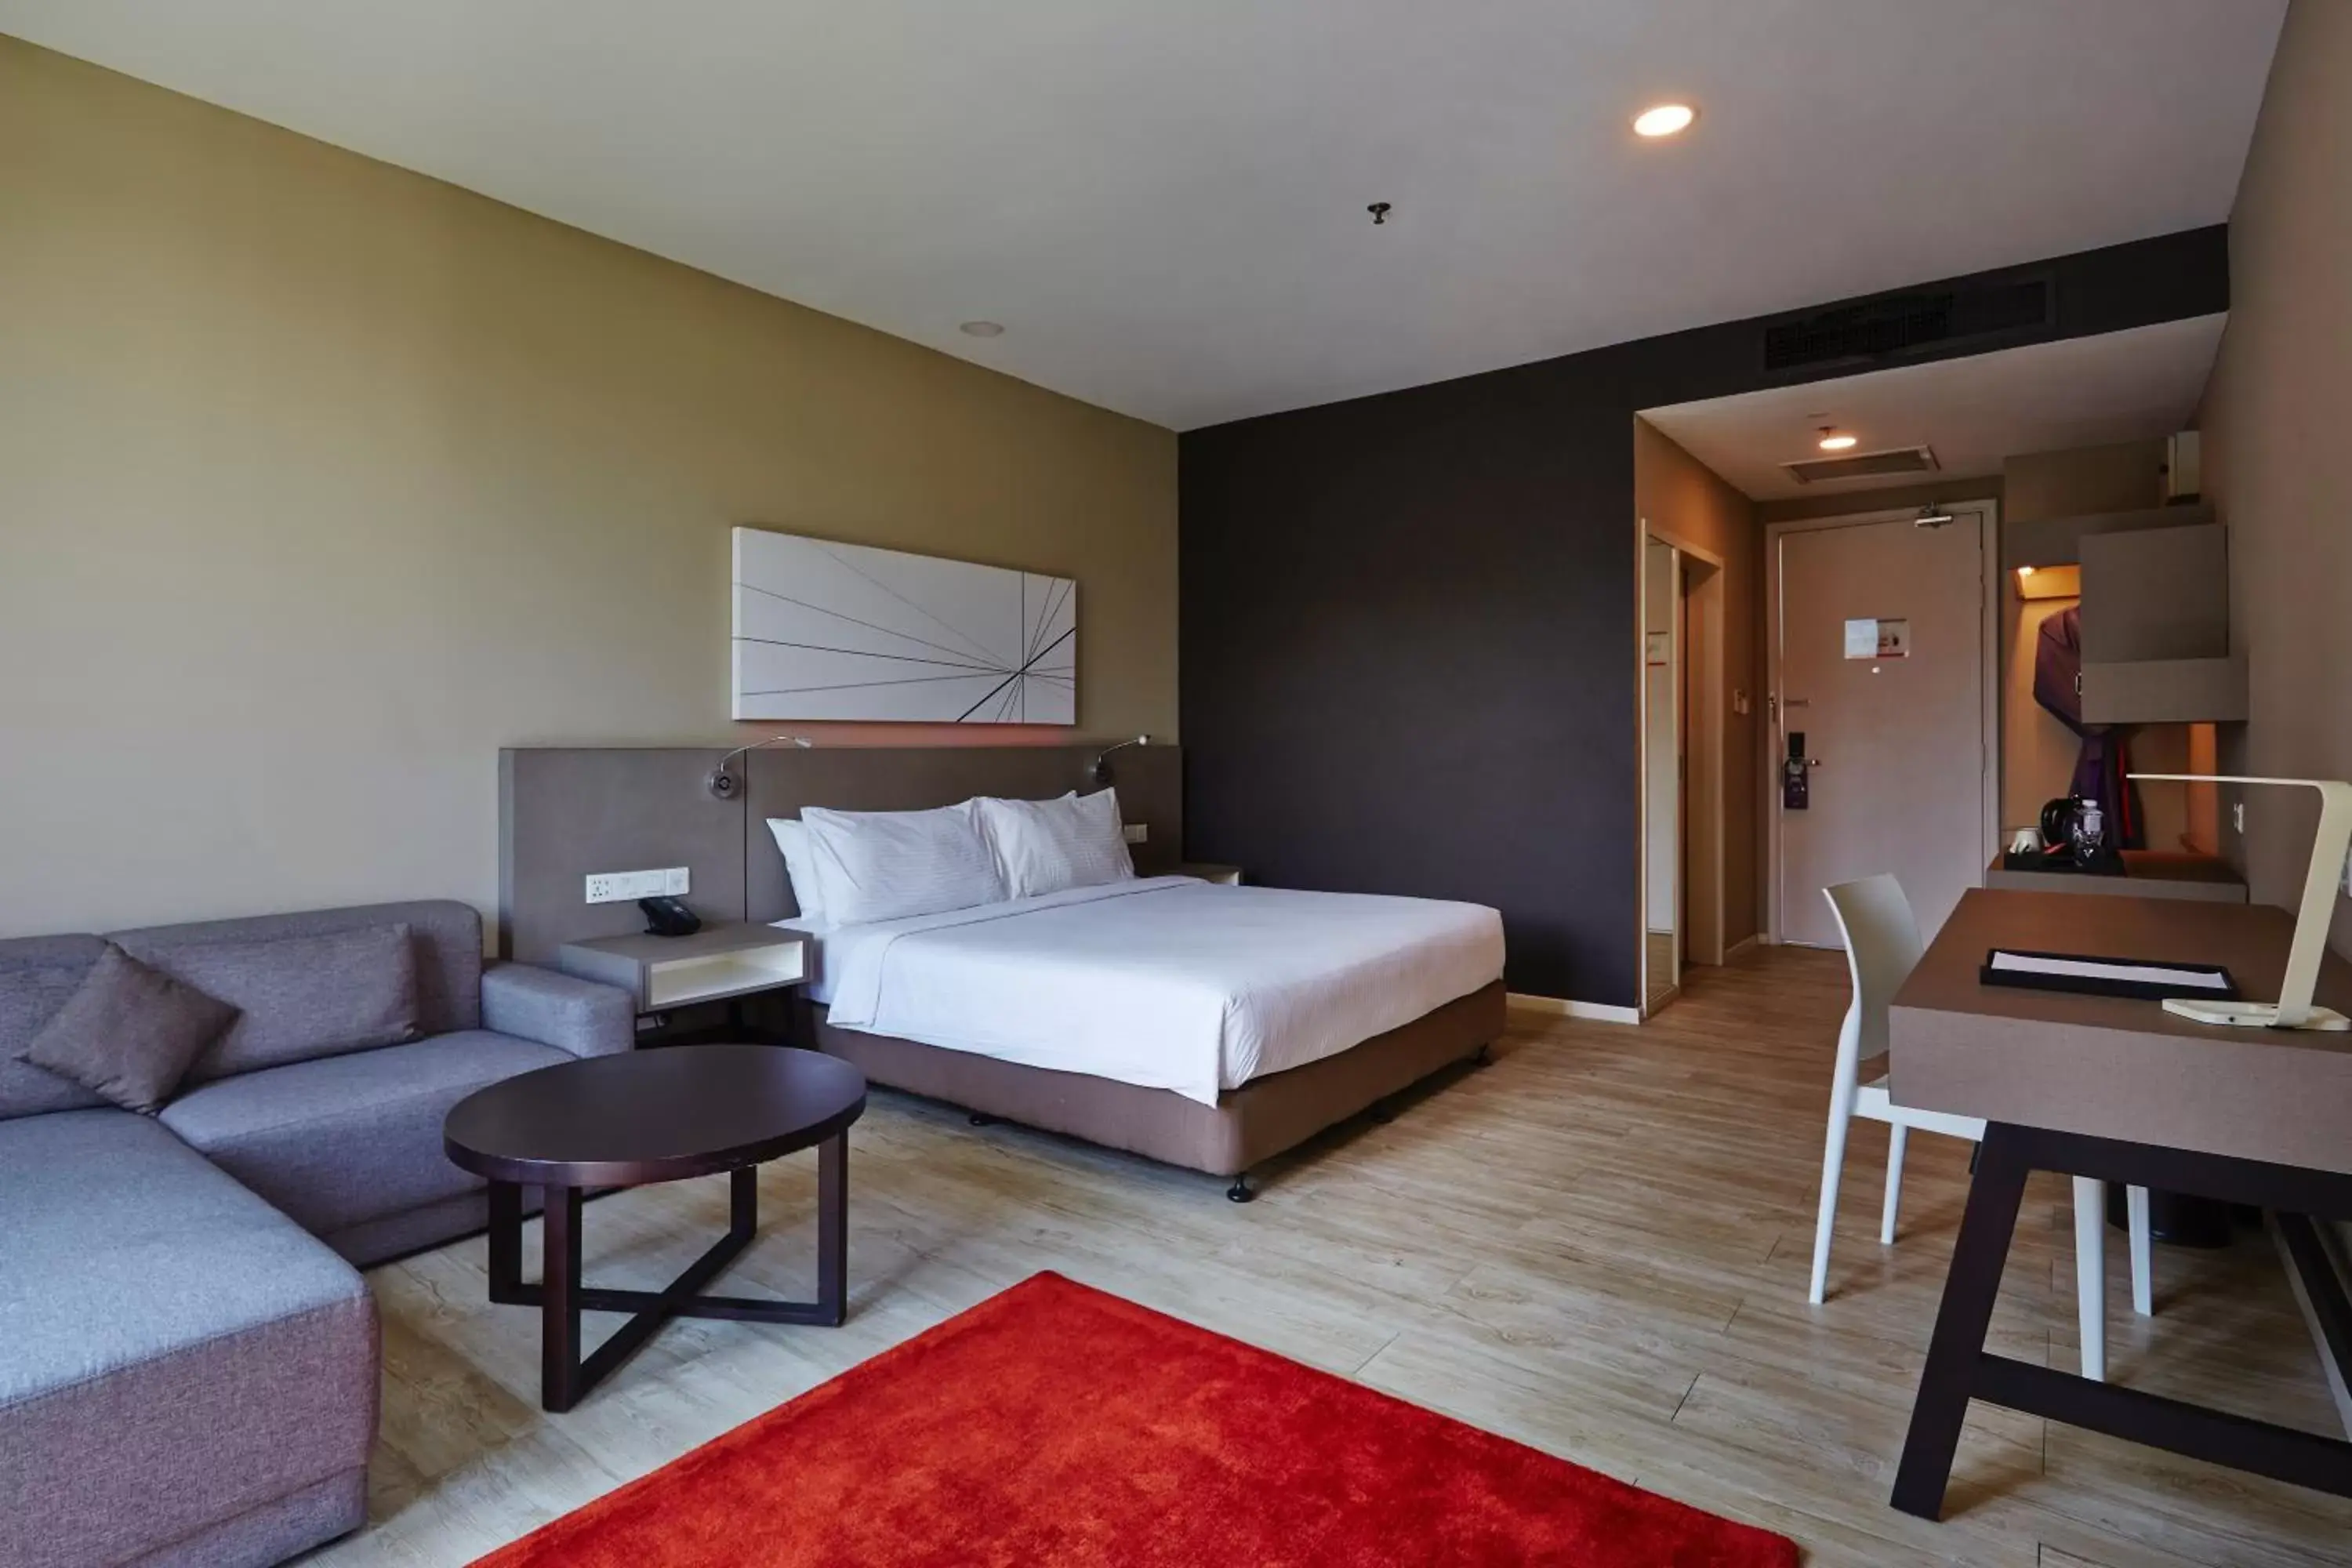 Bed in Qliq Damansara Hotel